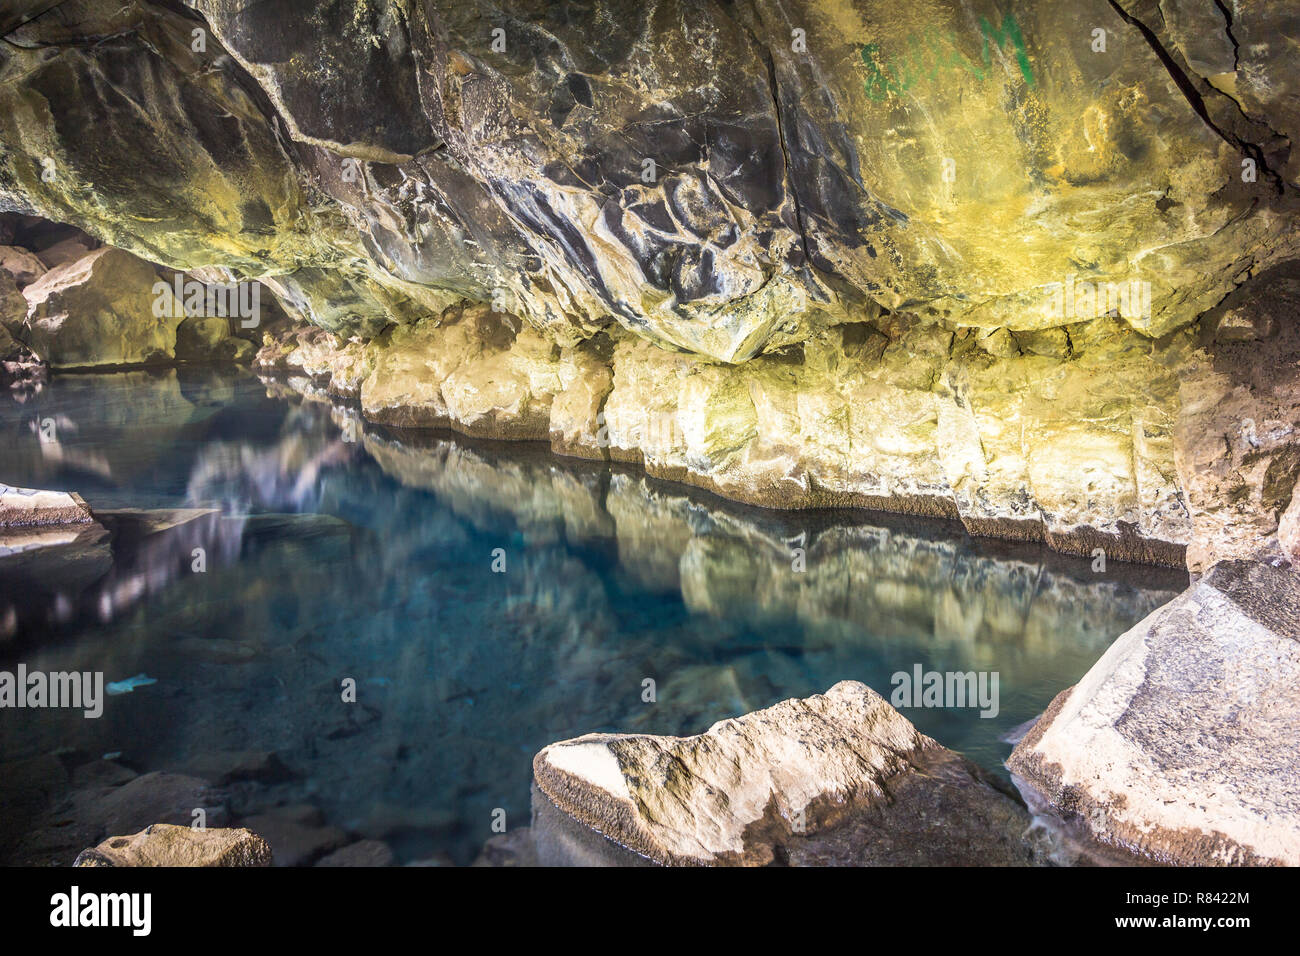 Grotagja cave, hot water myvatn Iceland Stock Photo